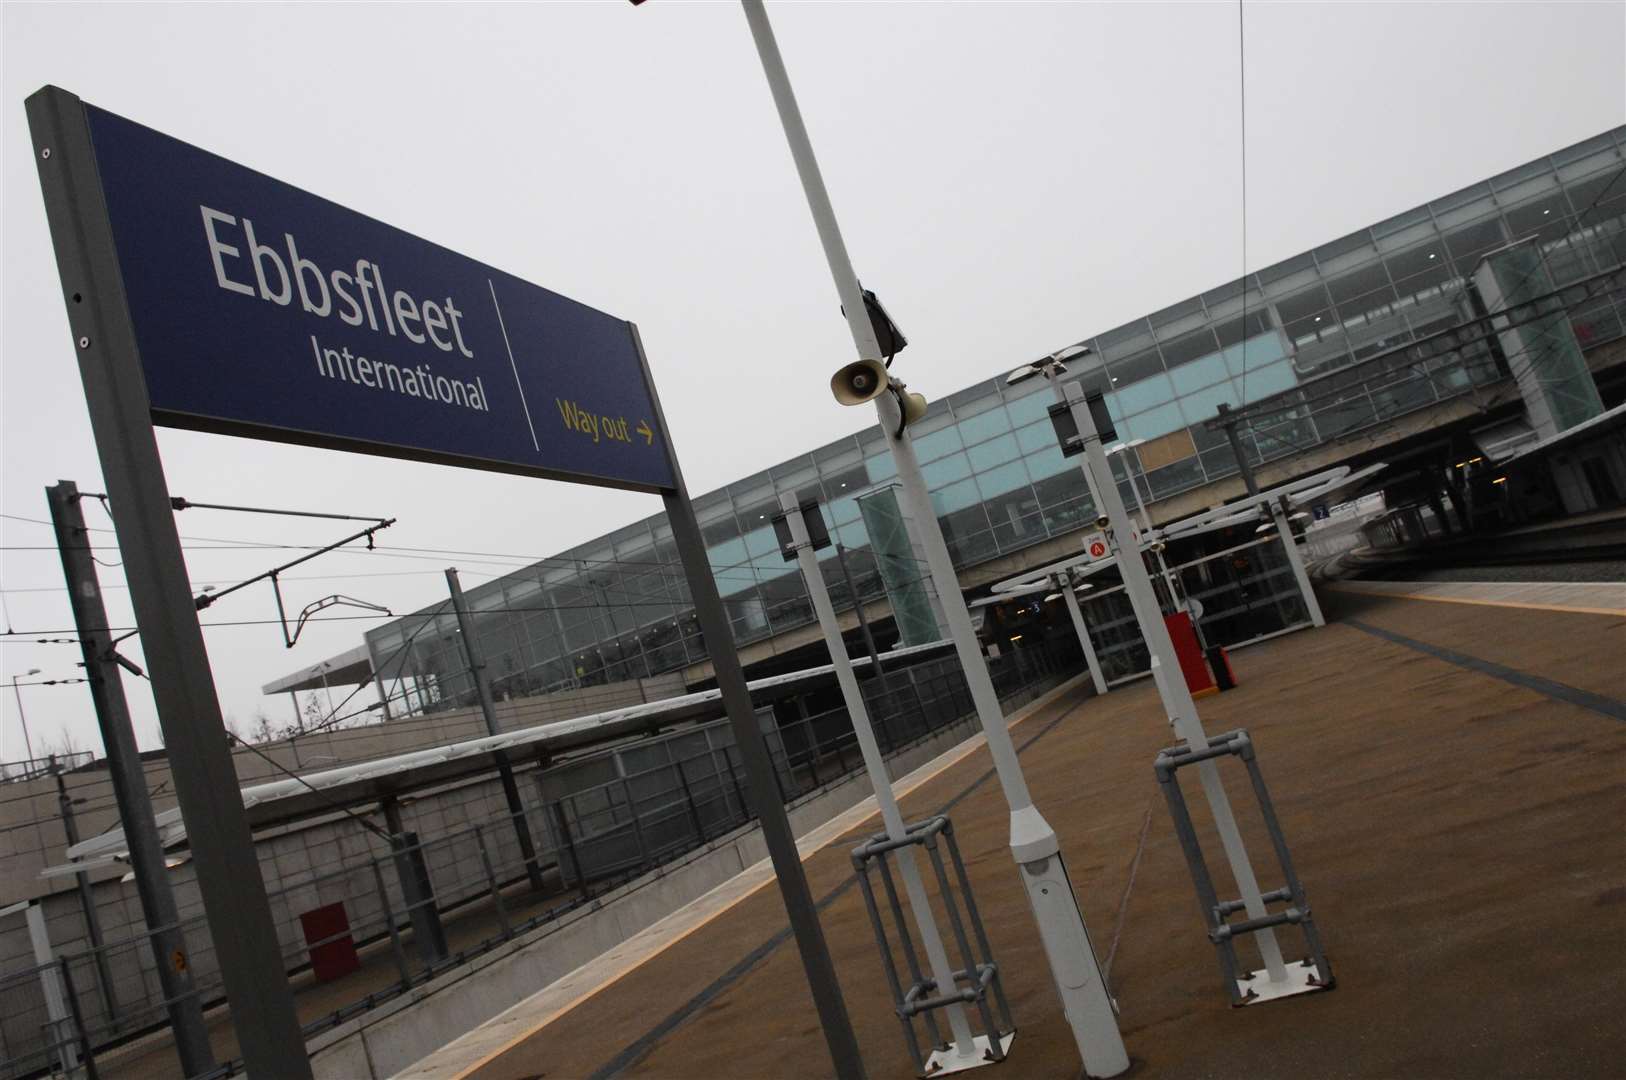 Khonde caused absolute turmoil at Ebbsfleet international train station